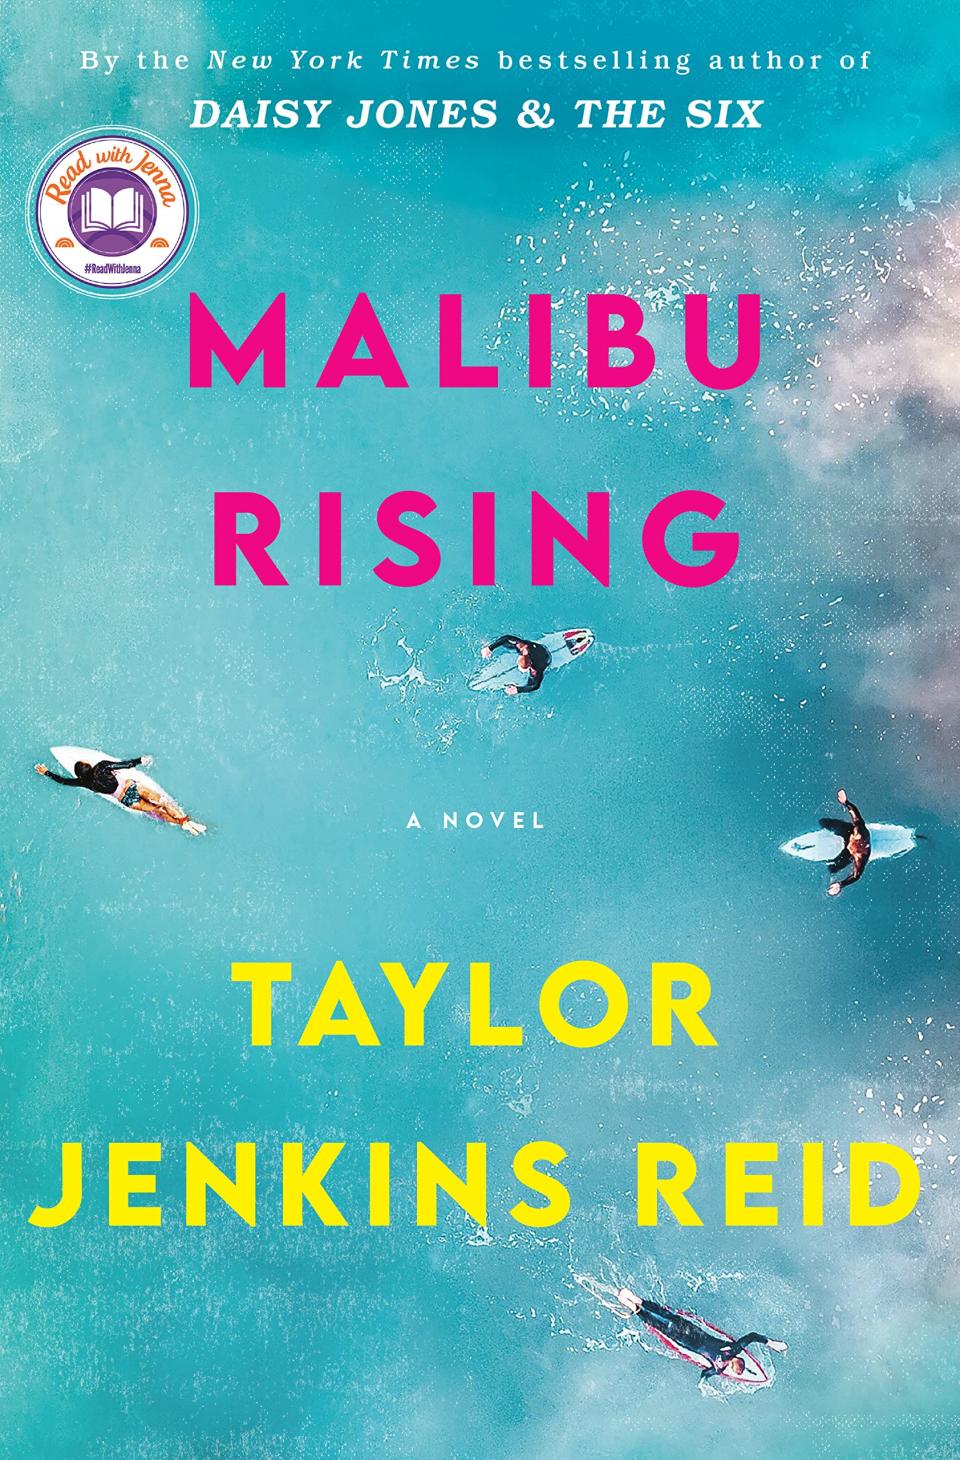 "Malibu Rising," by Taylor Jenkins Reid